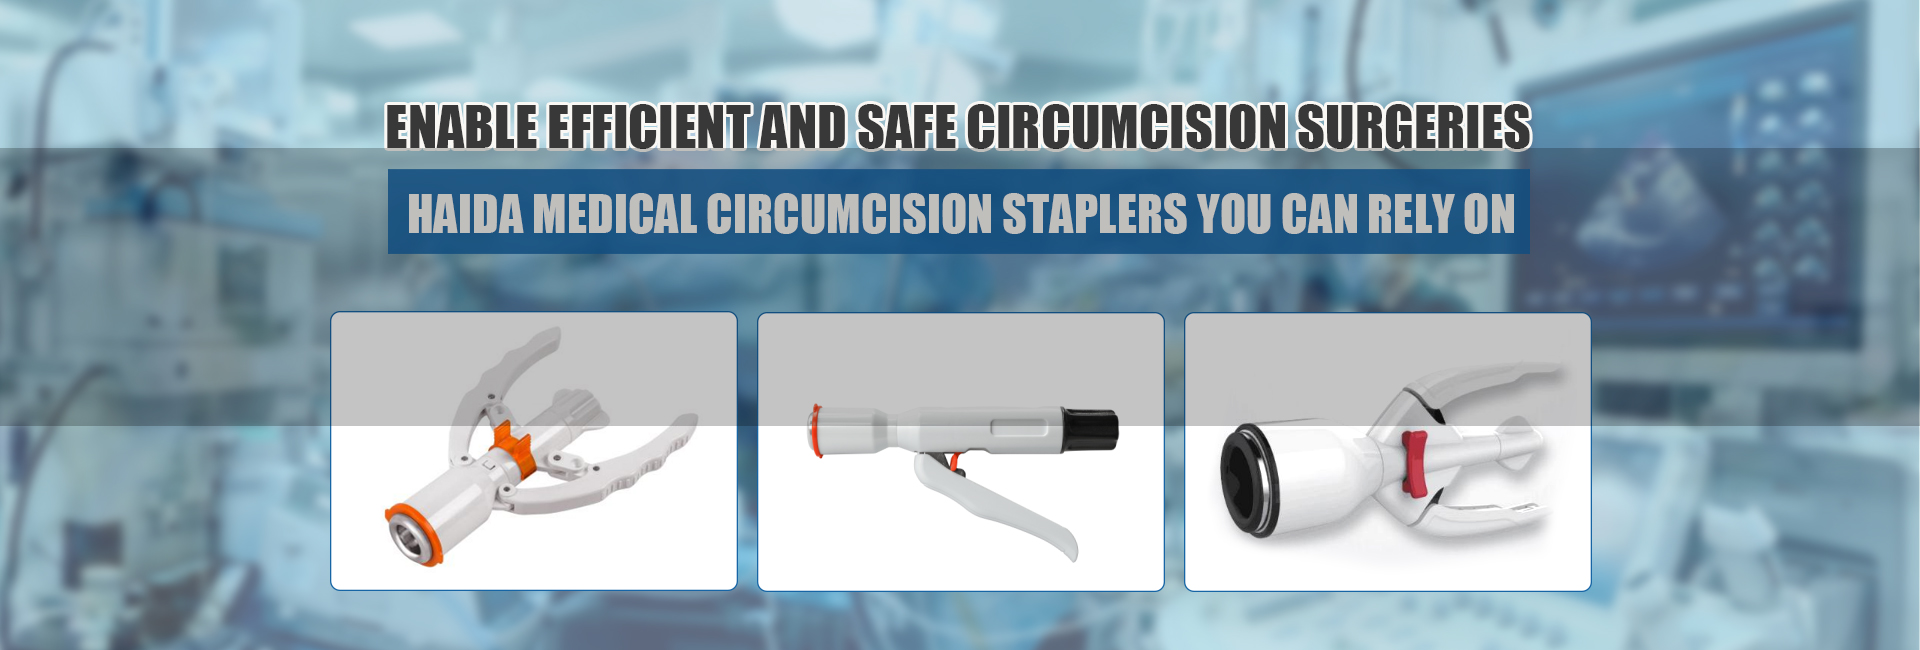 Appareils de circoncision